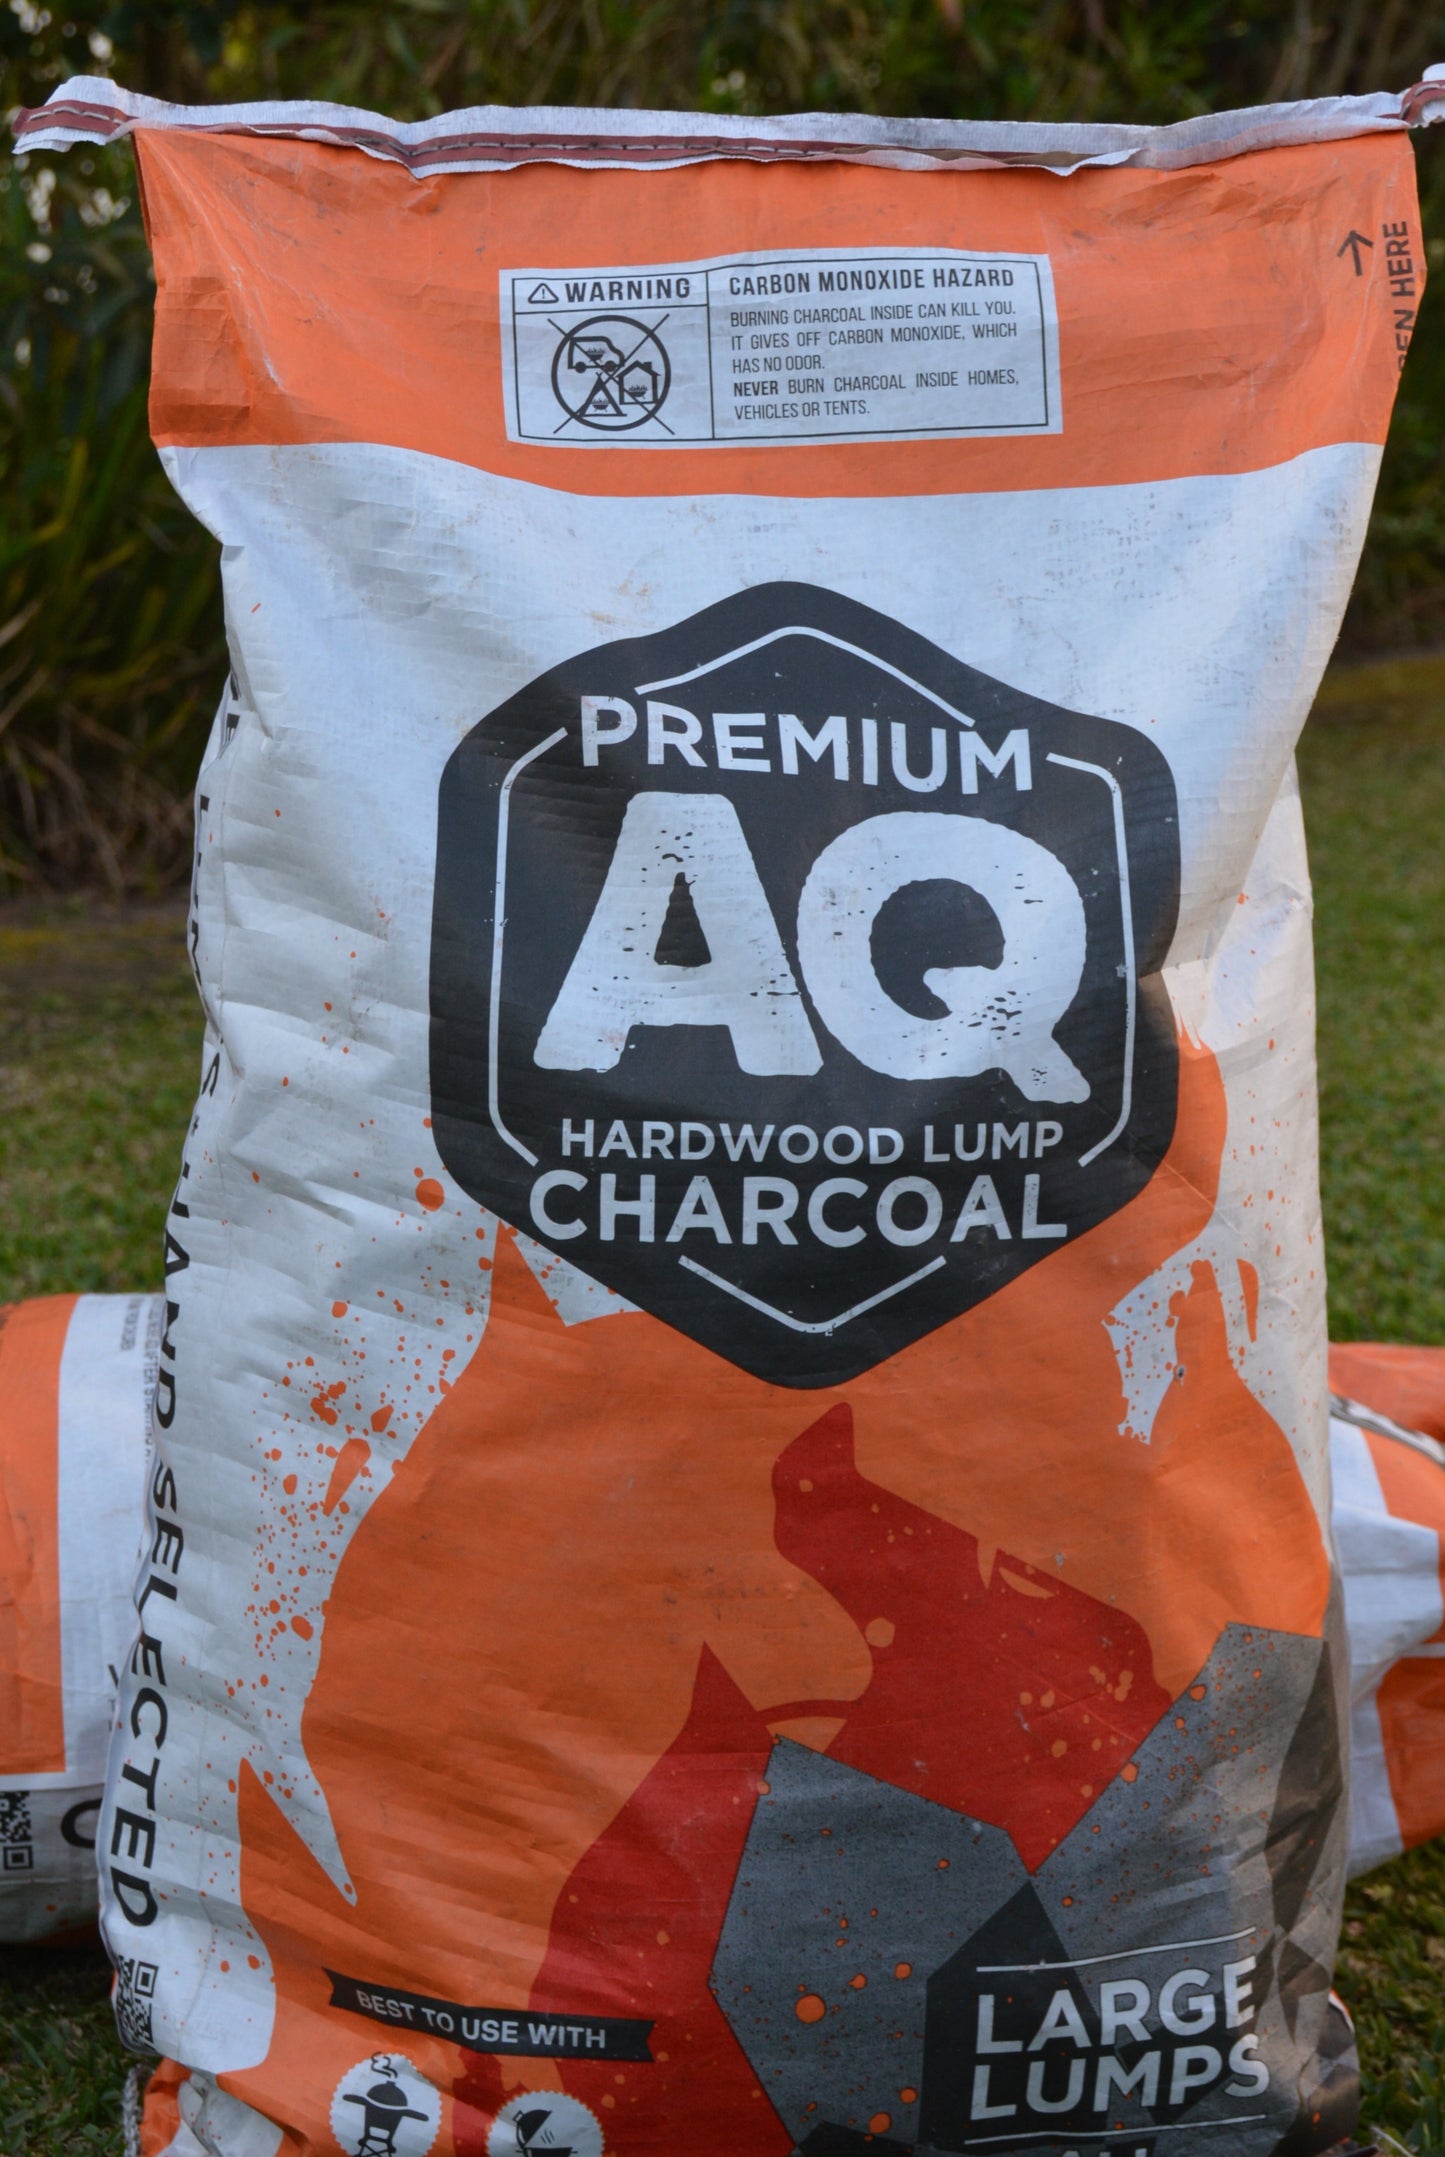 35 lbs AQ Hardwood Lump Charcoal bag